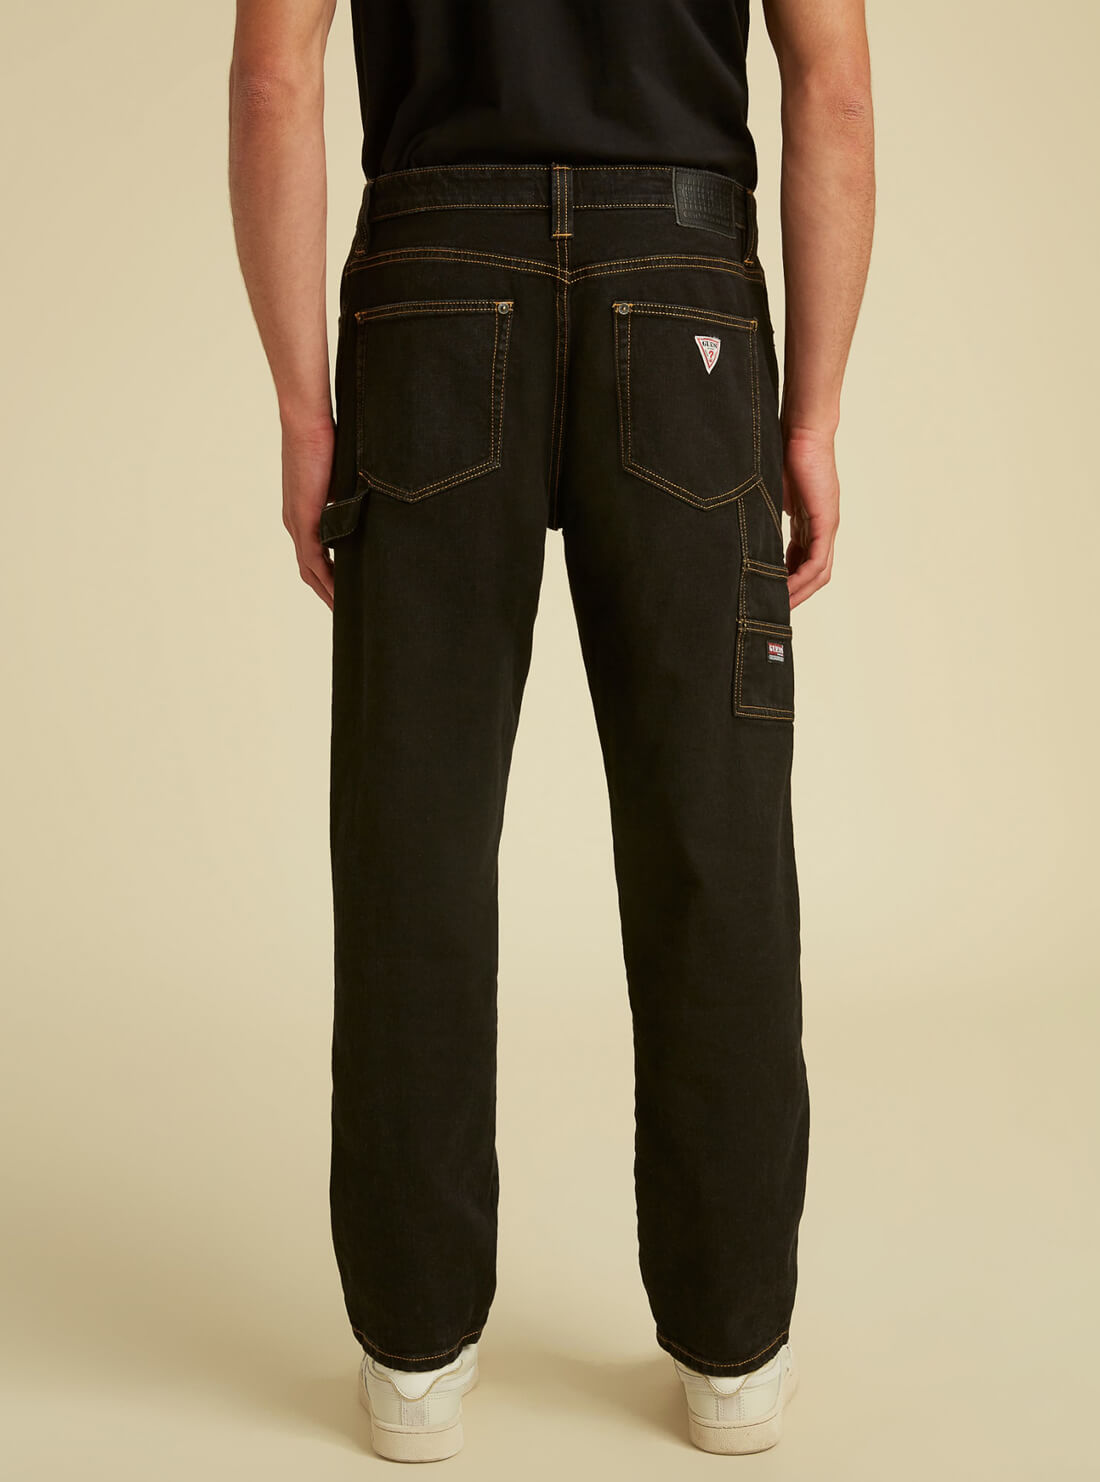 GUESS Mens GUESS Originals Straight Fit Carpenter Denim Jeans in Vintage Black Wash M1GA06R4AS0 Back View